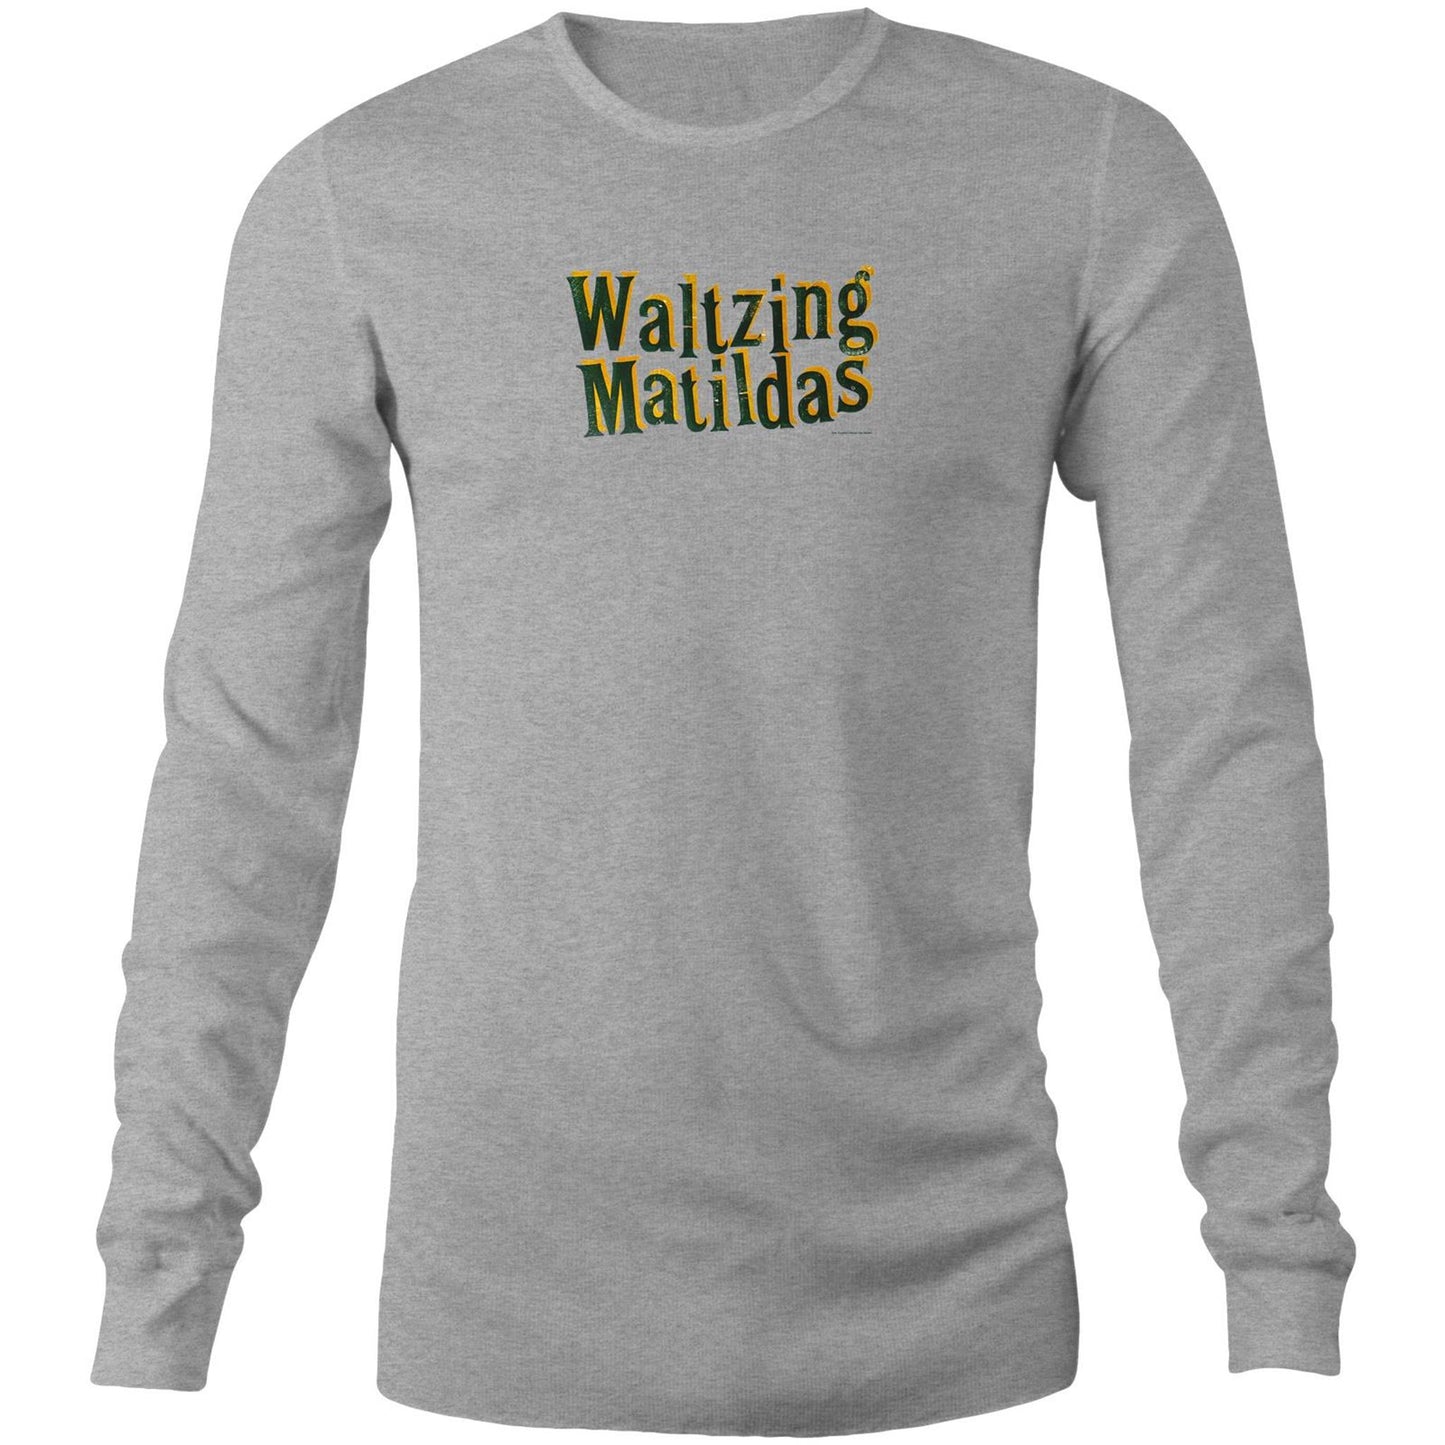 Waltzing Matildas Long Sleeve T Shirts